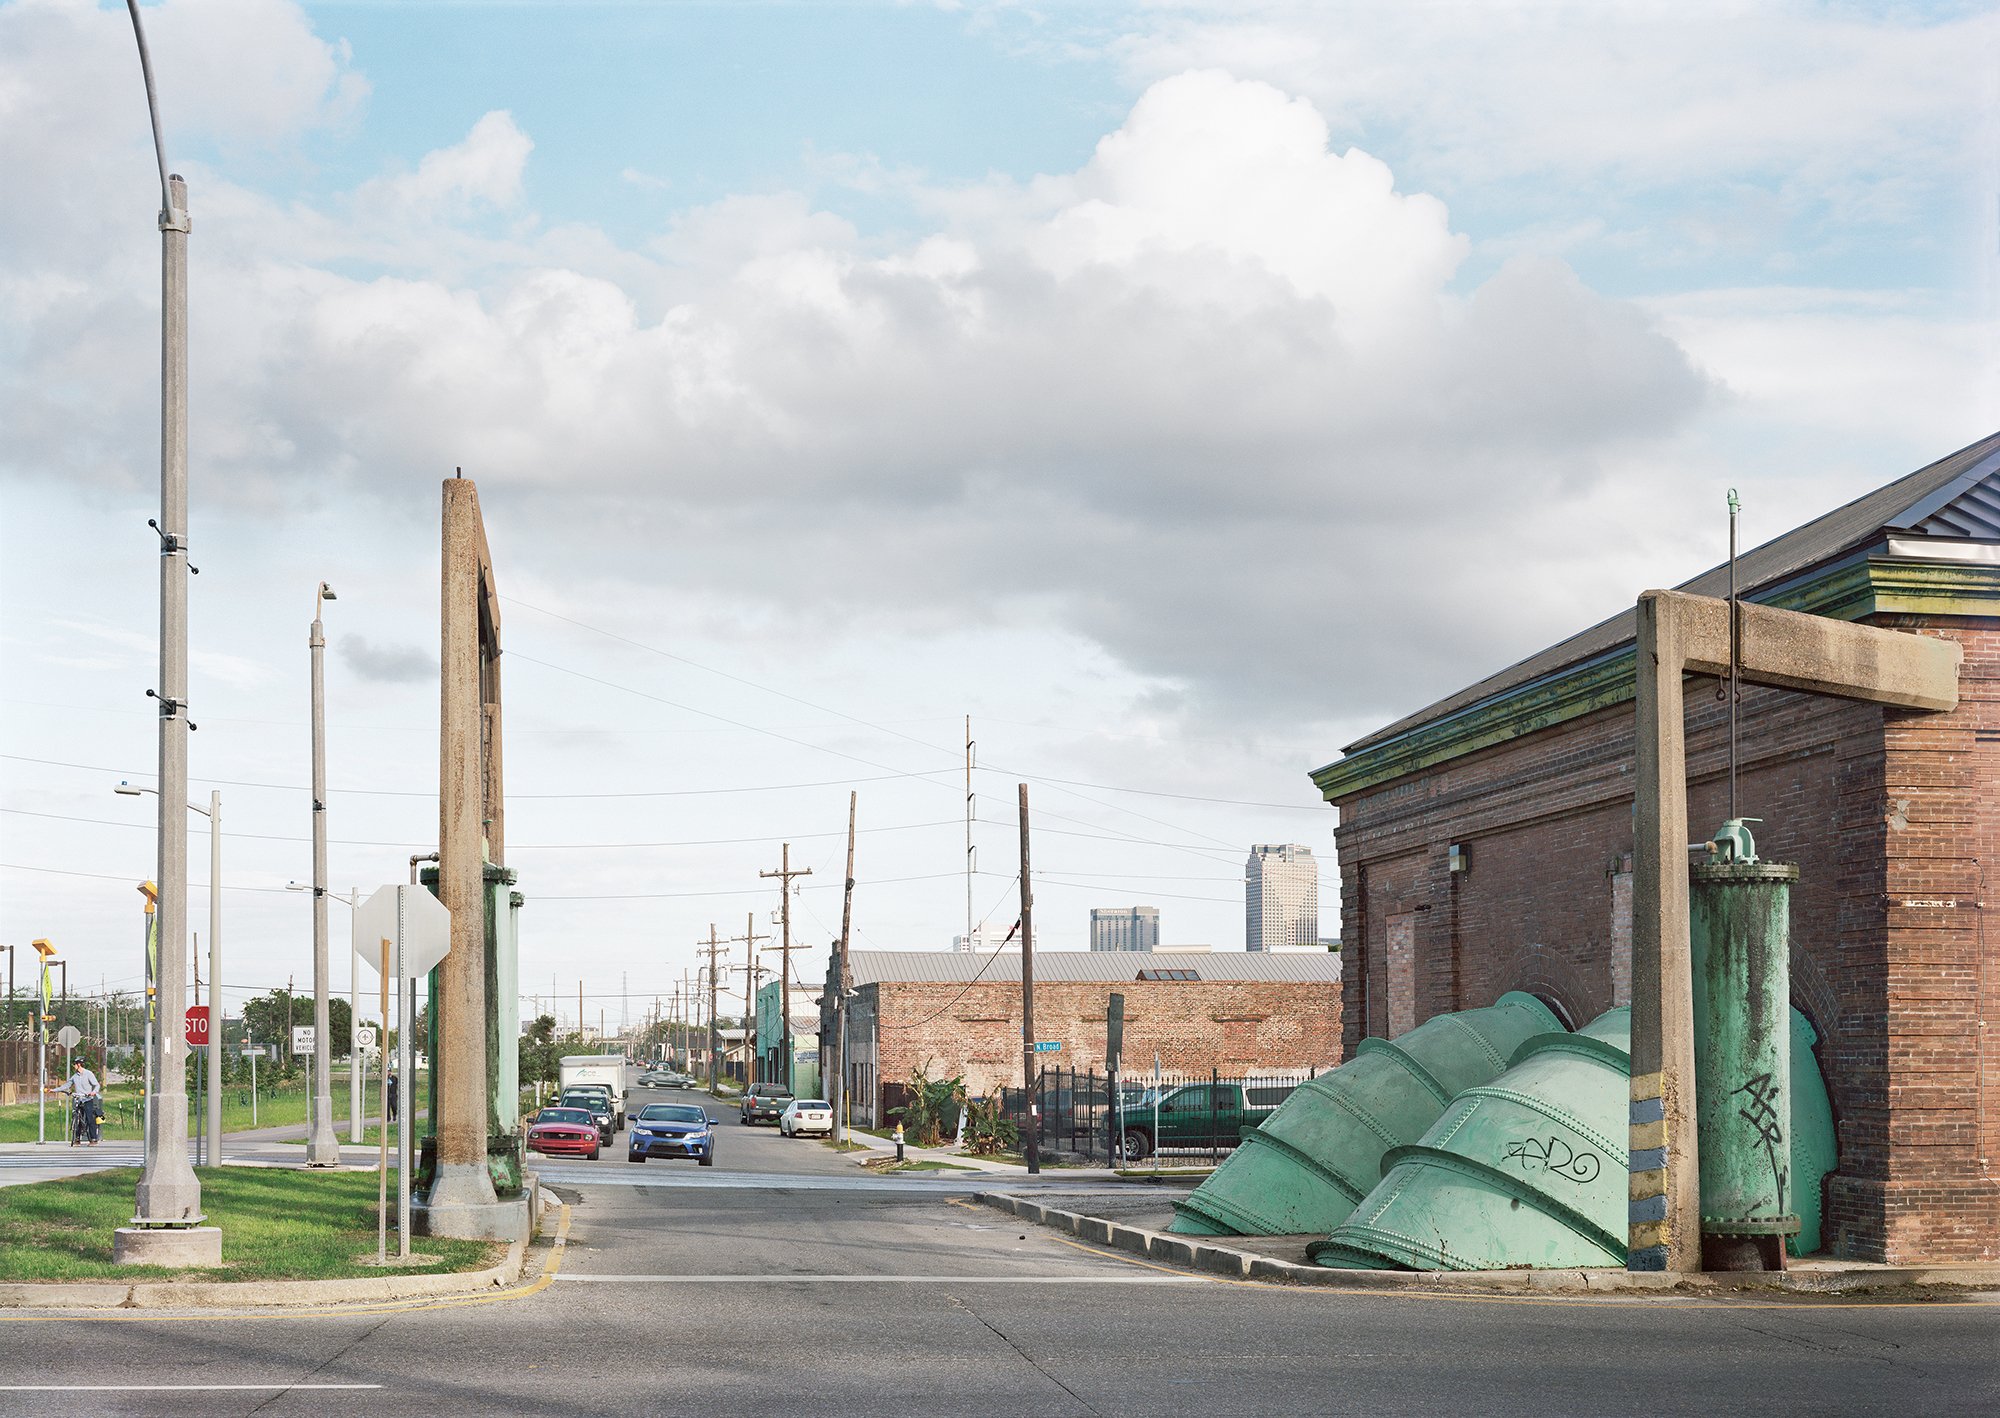 Drainage Pump Station, New Orleans, Louisiana, 2016